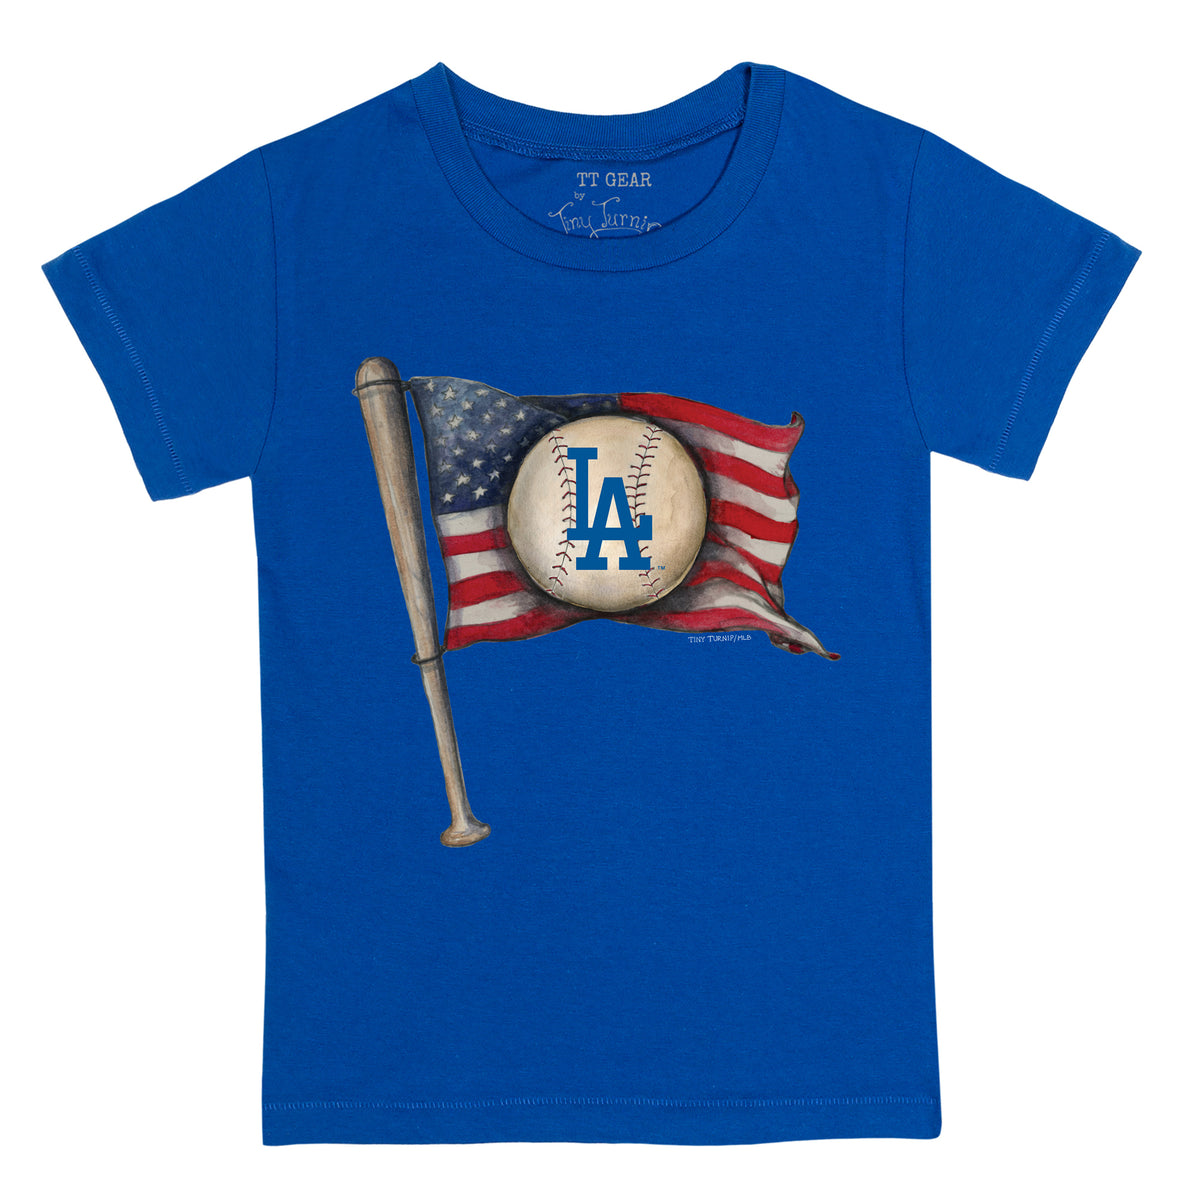 Los Angeles Dodgers Baseball Flag Tee Shirt